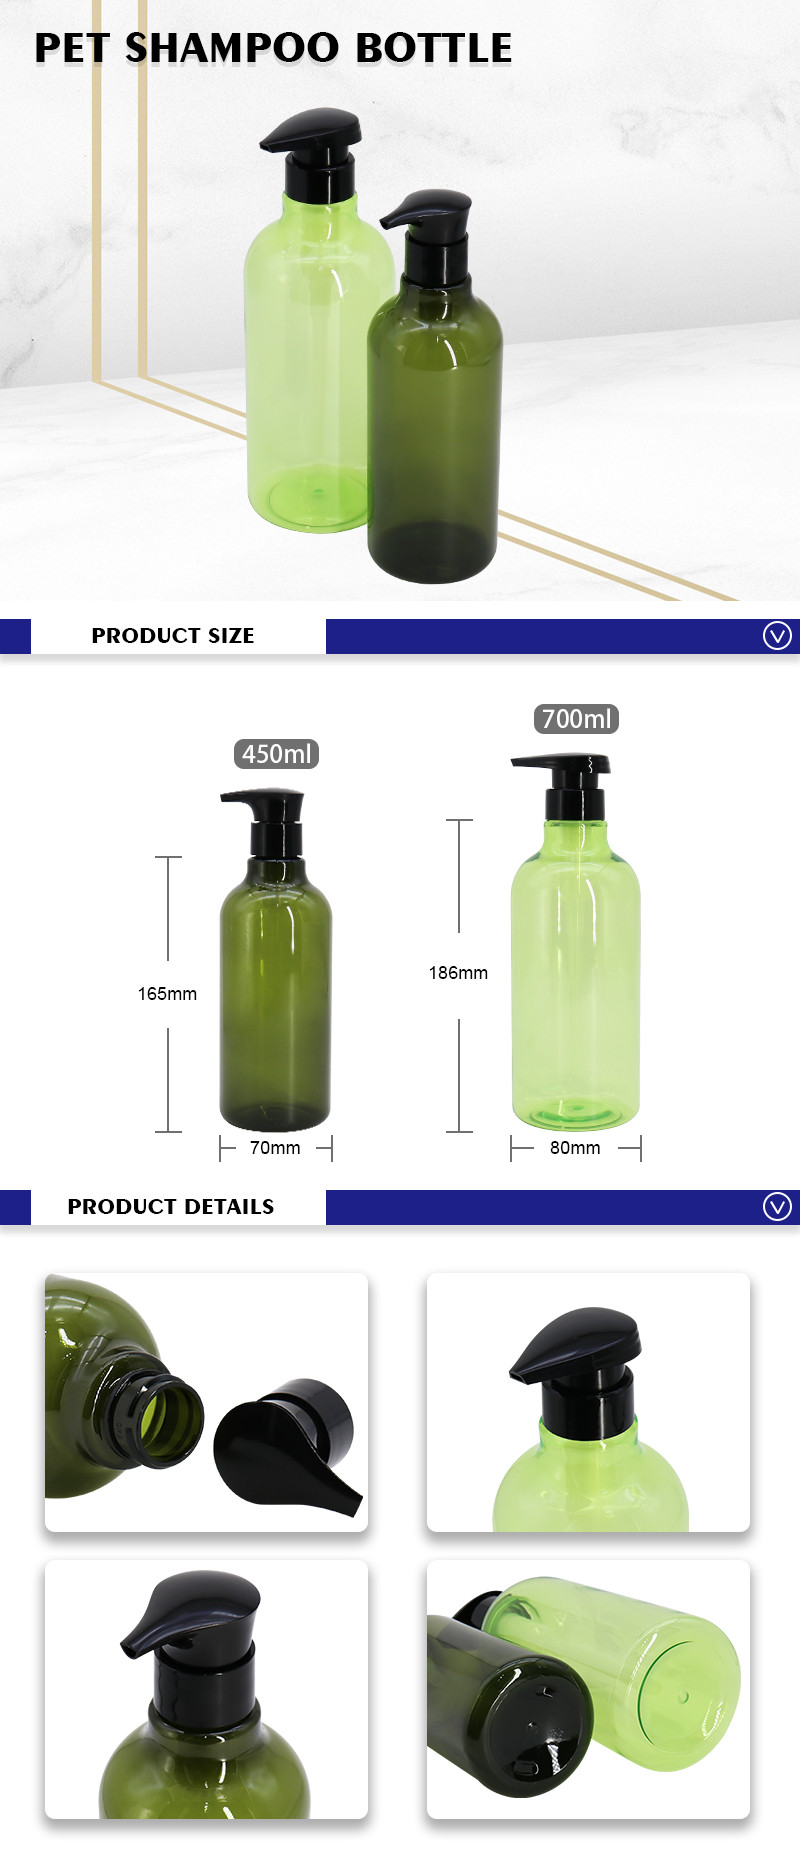 The Round Green Shampoo Bottle